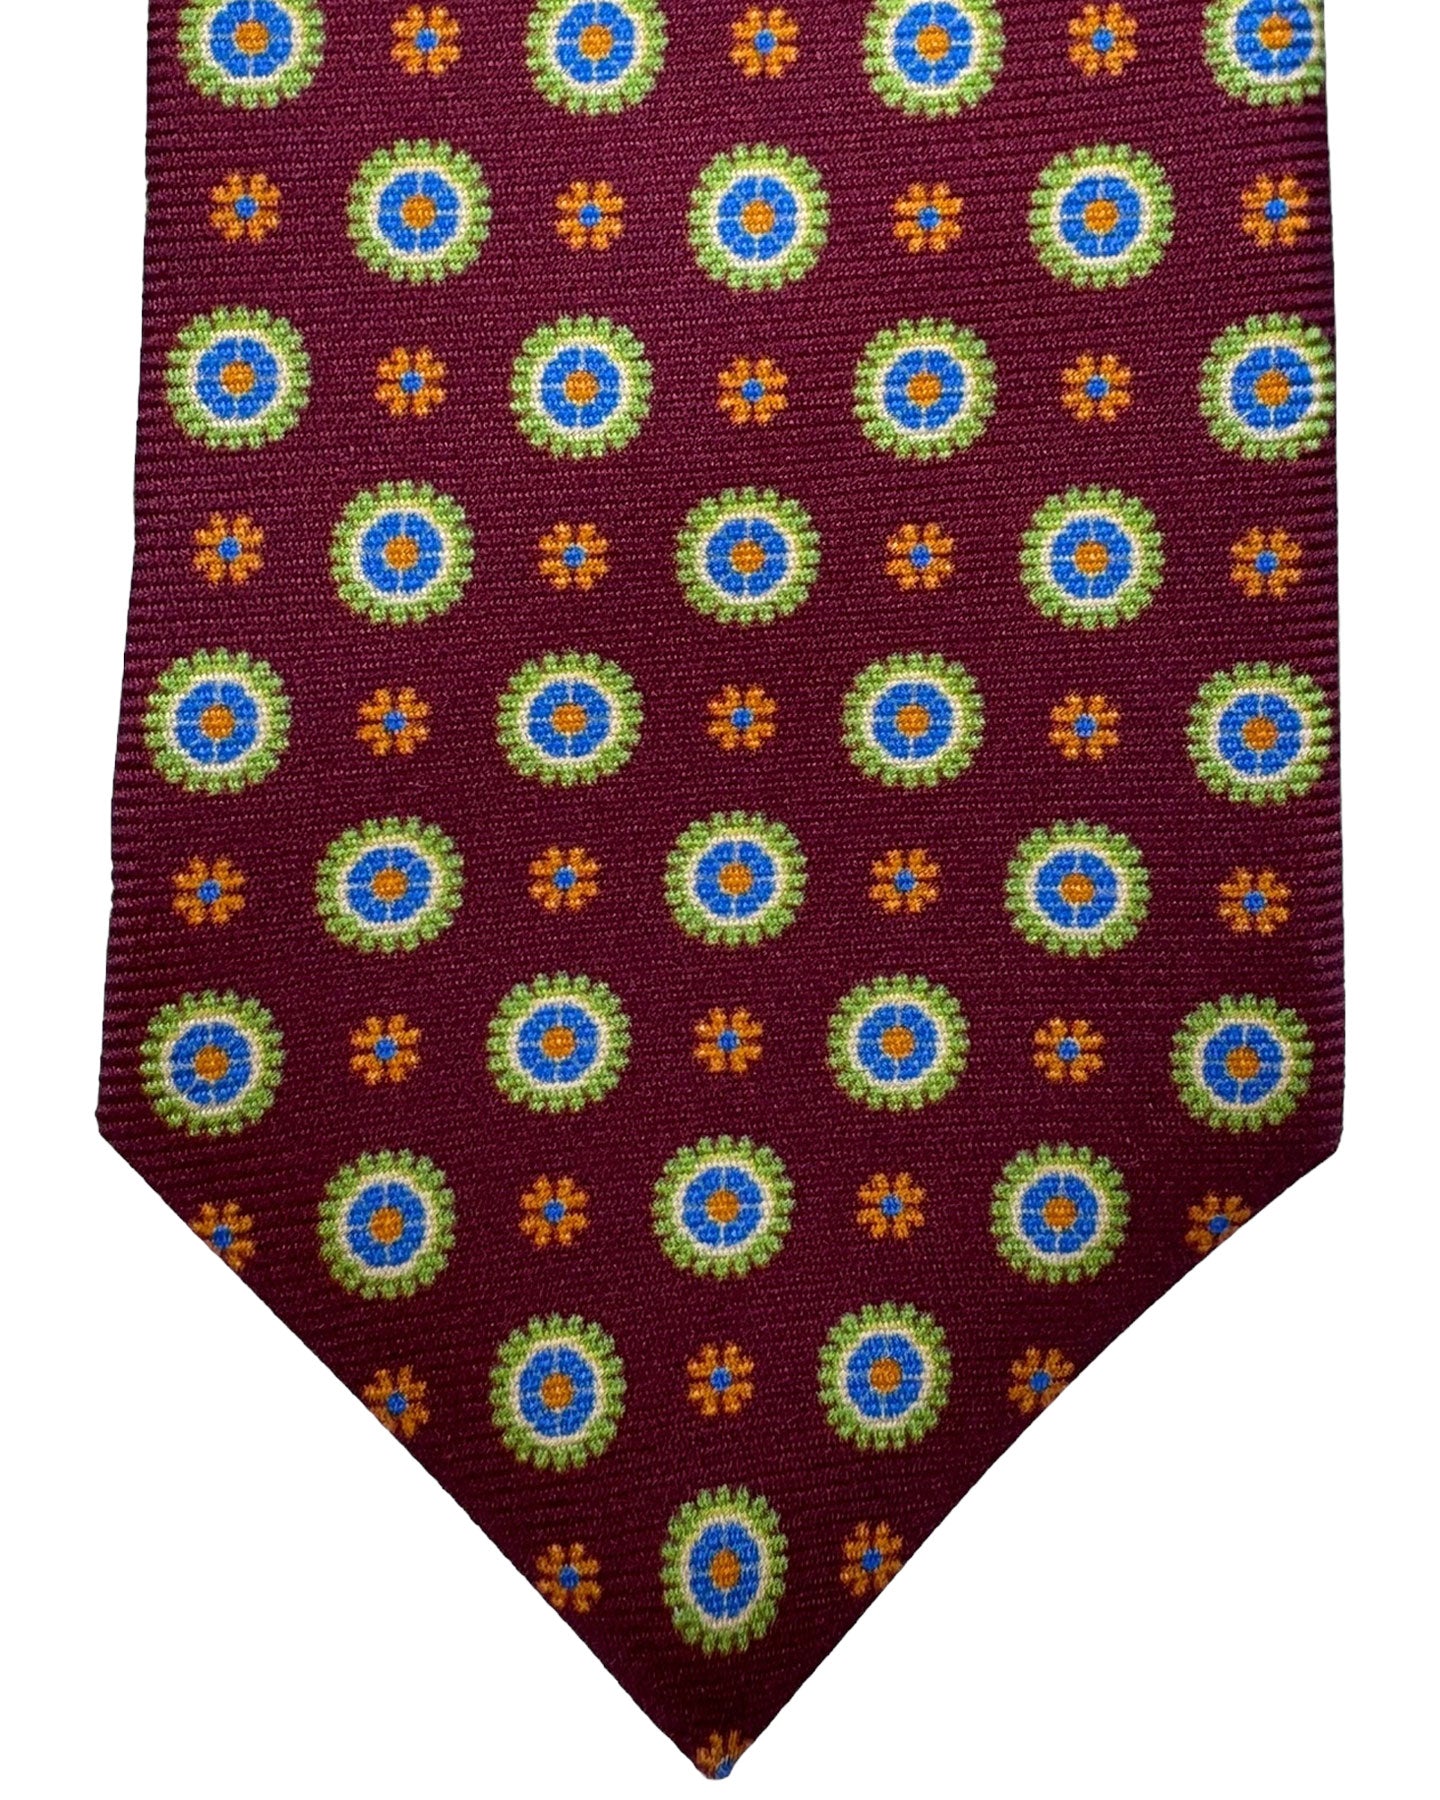 Kiton Tie Brown Lime Orange Floral - Sevenfold Necktie